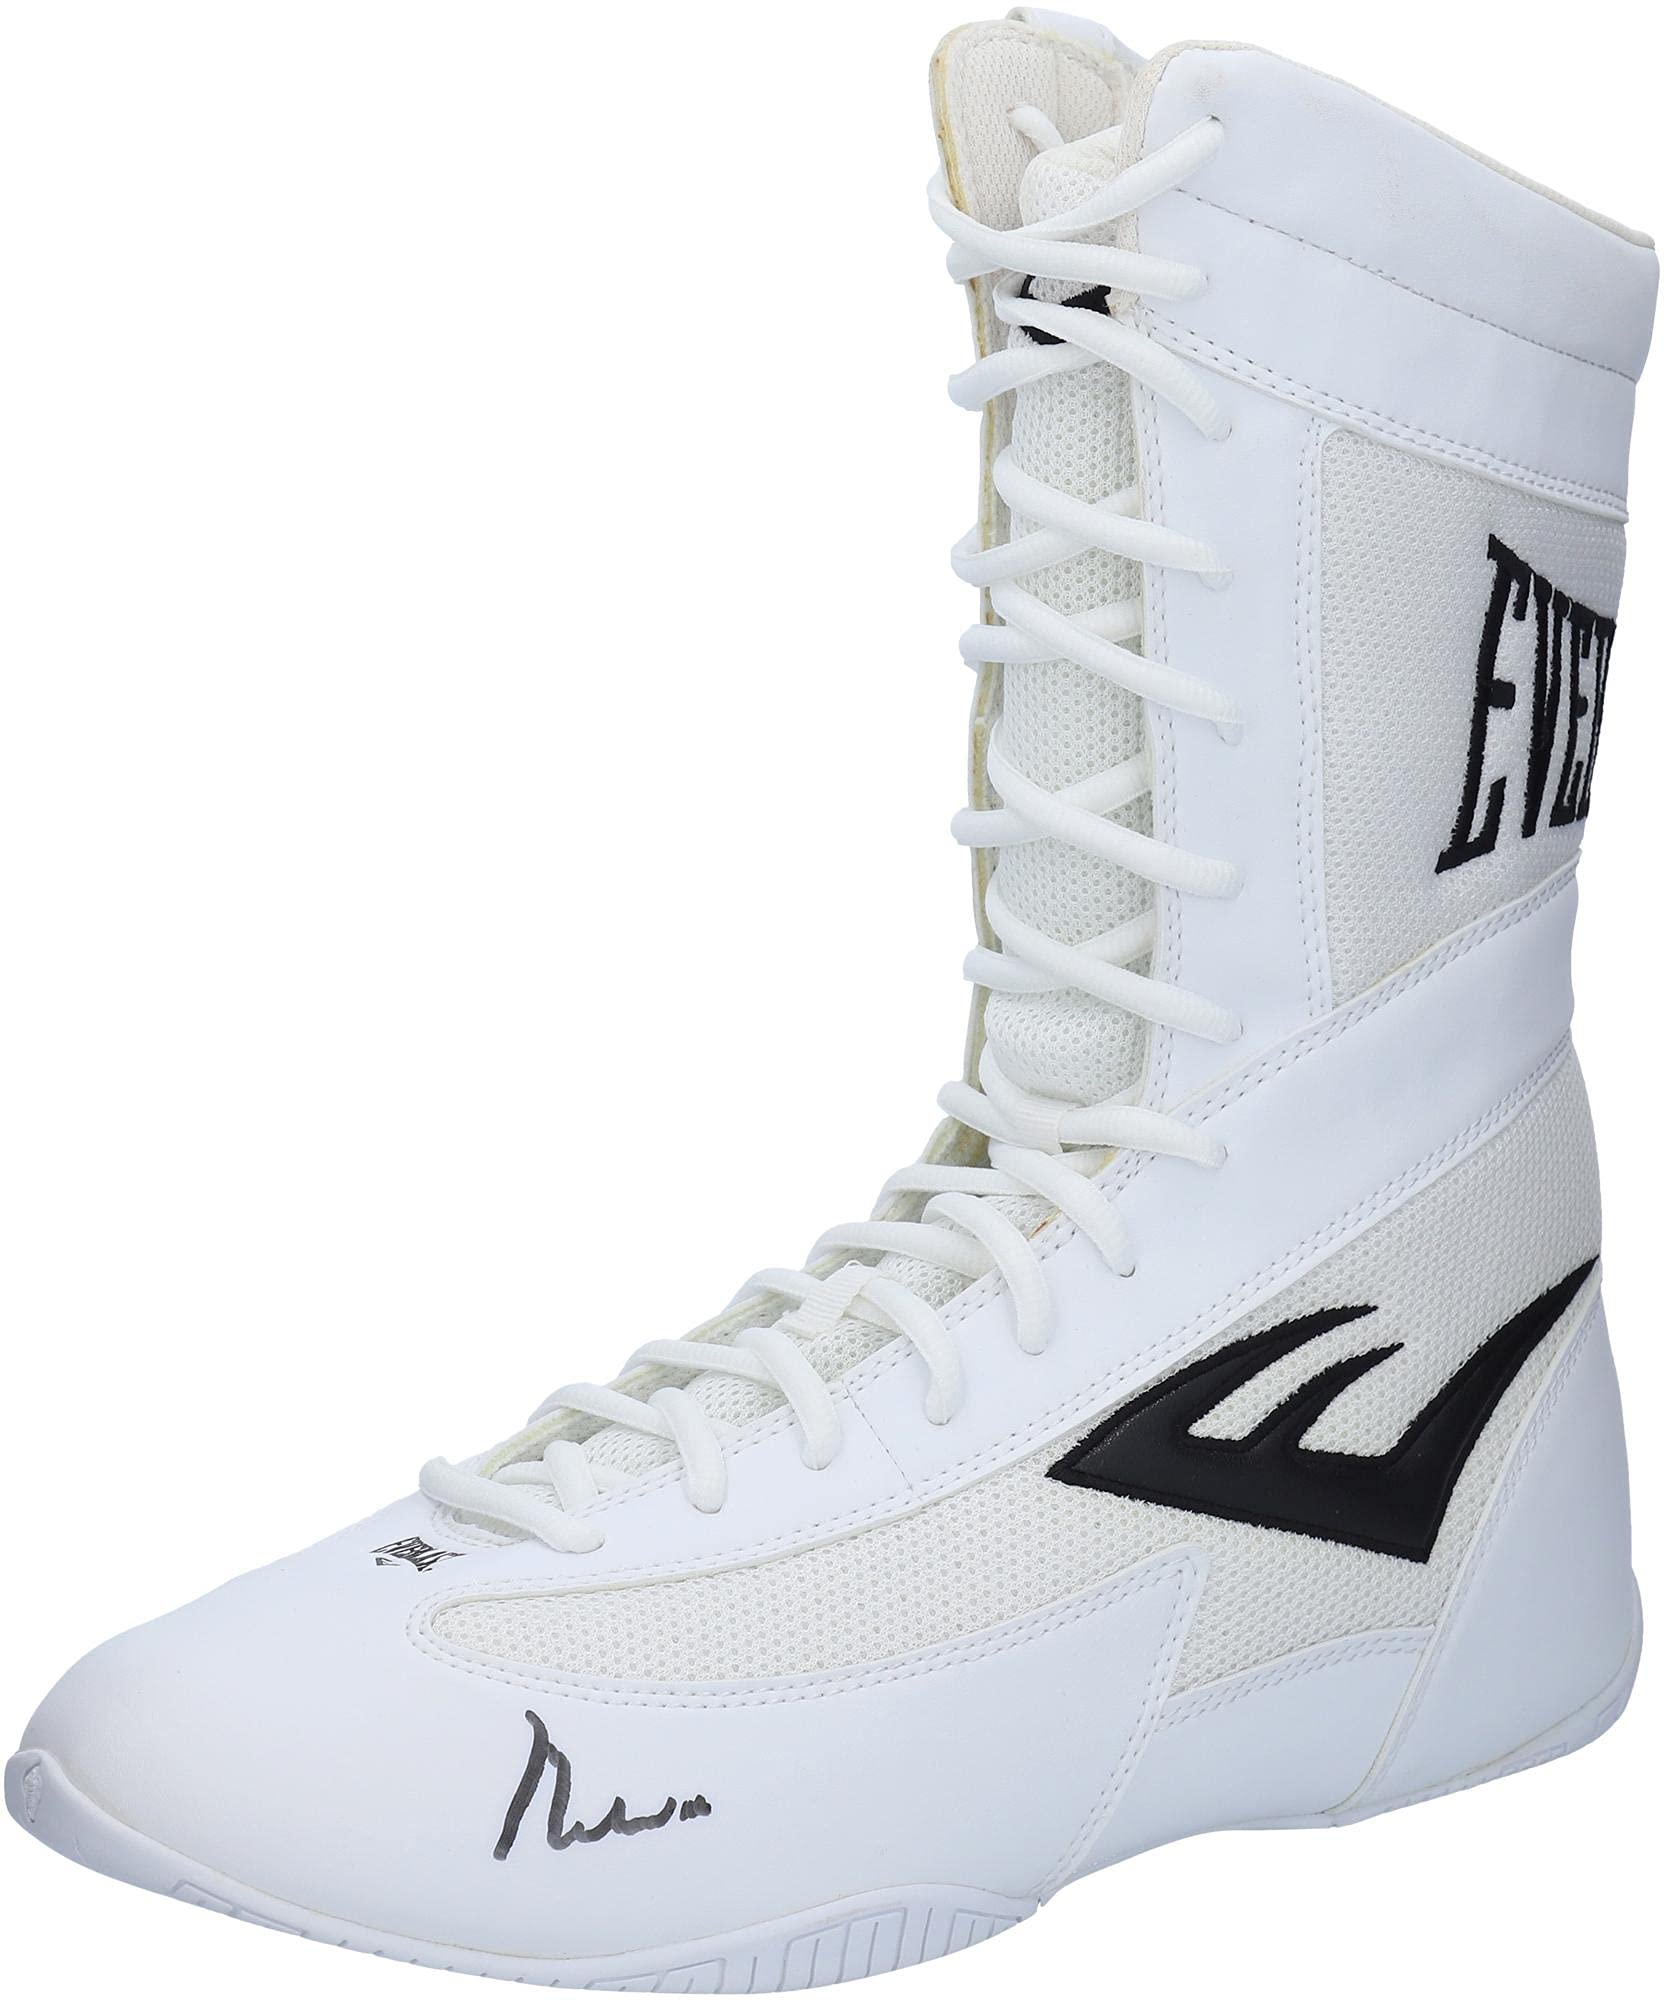 Muhammad Ali Autographed White Everlast Boxing Shoe - PSA/DNA